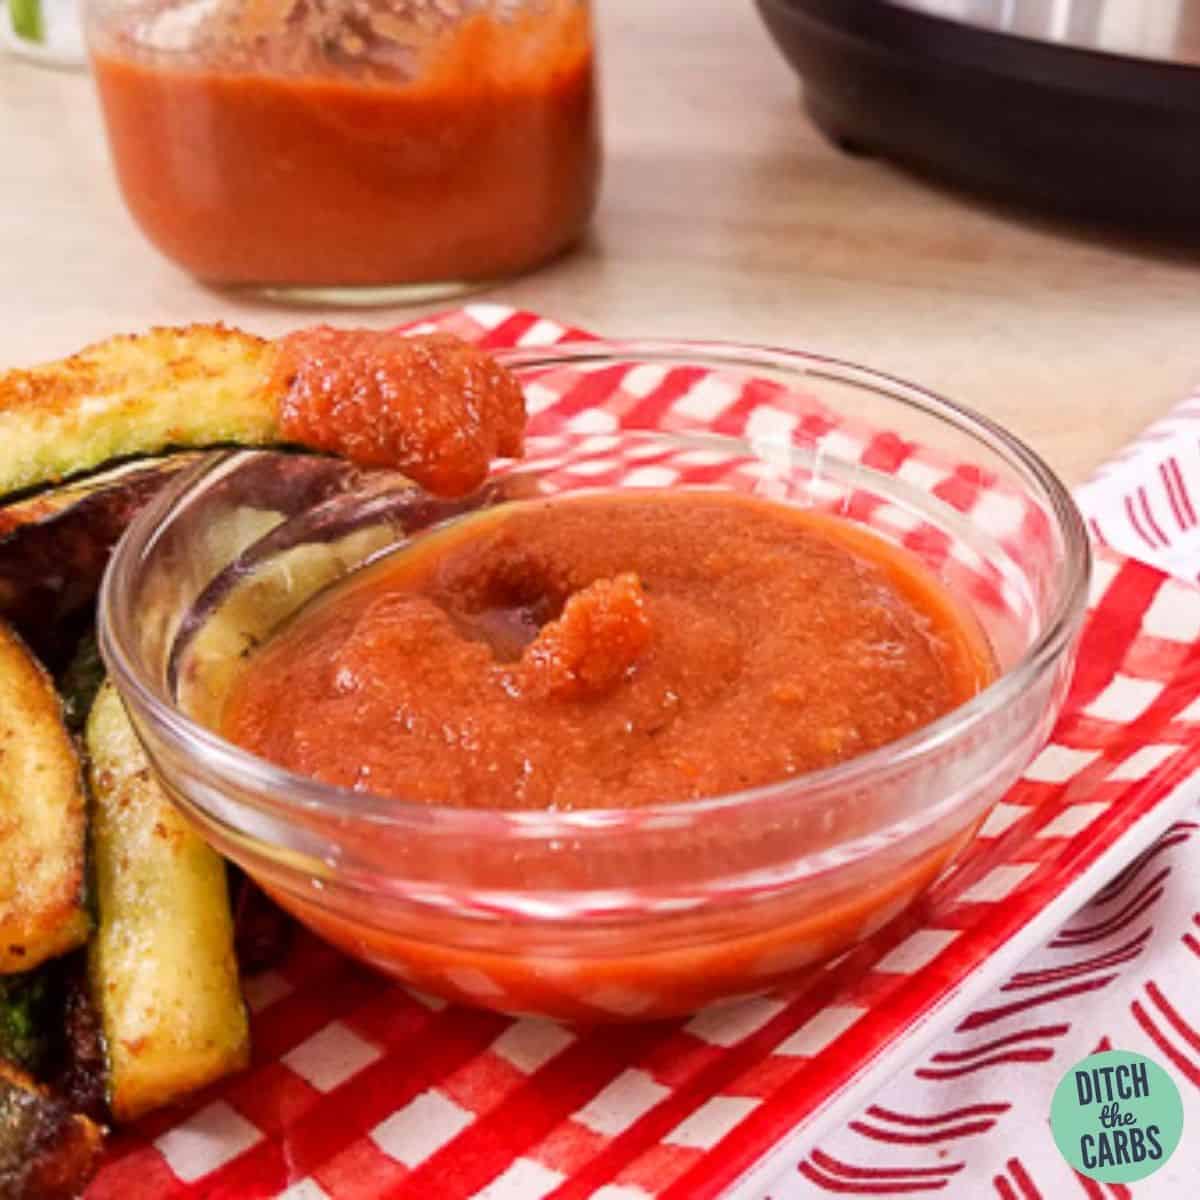 Sugar-free ketchup in a glass bowl